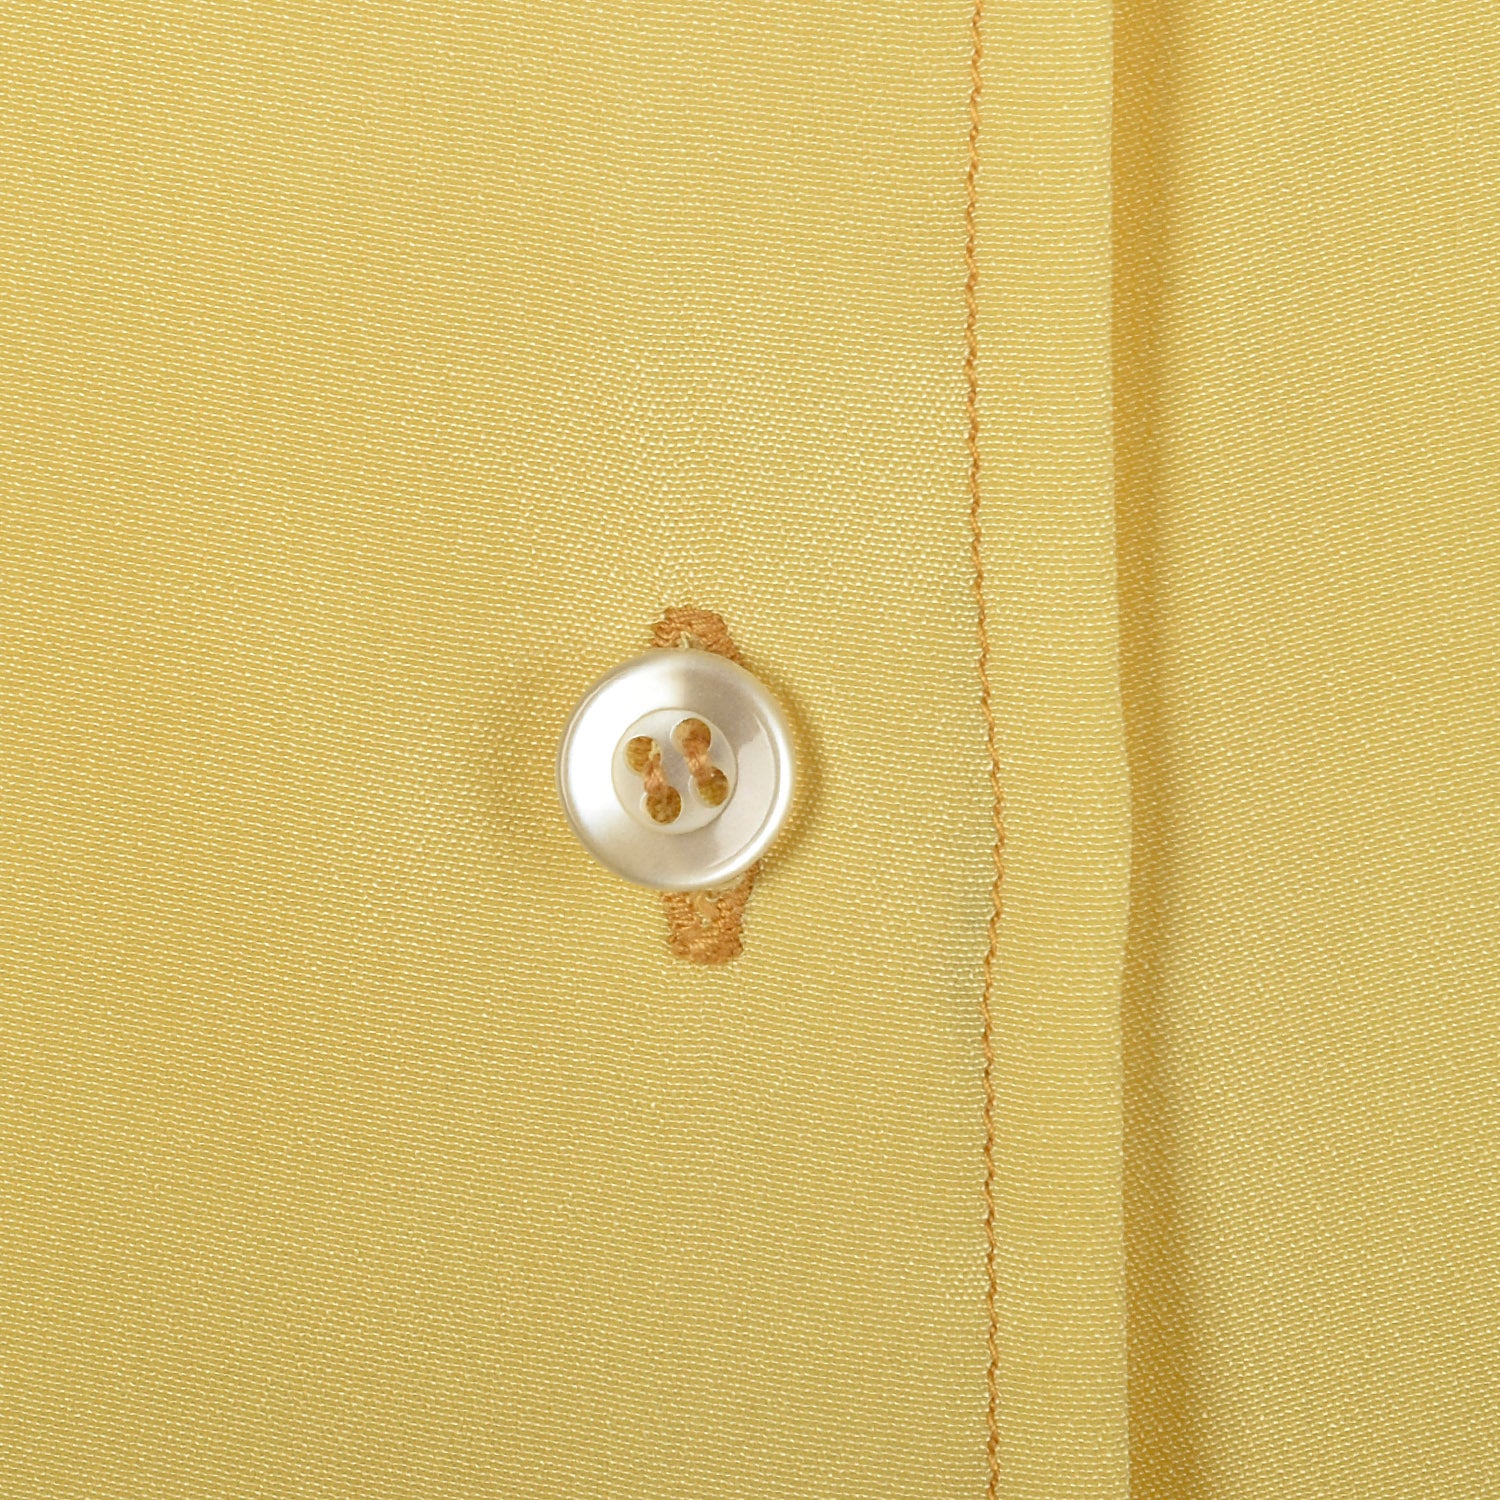 Medium 1950s Pale Yellow Silk Blouse